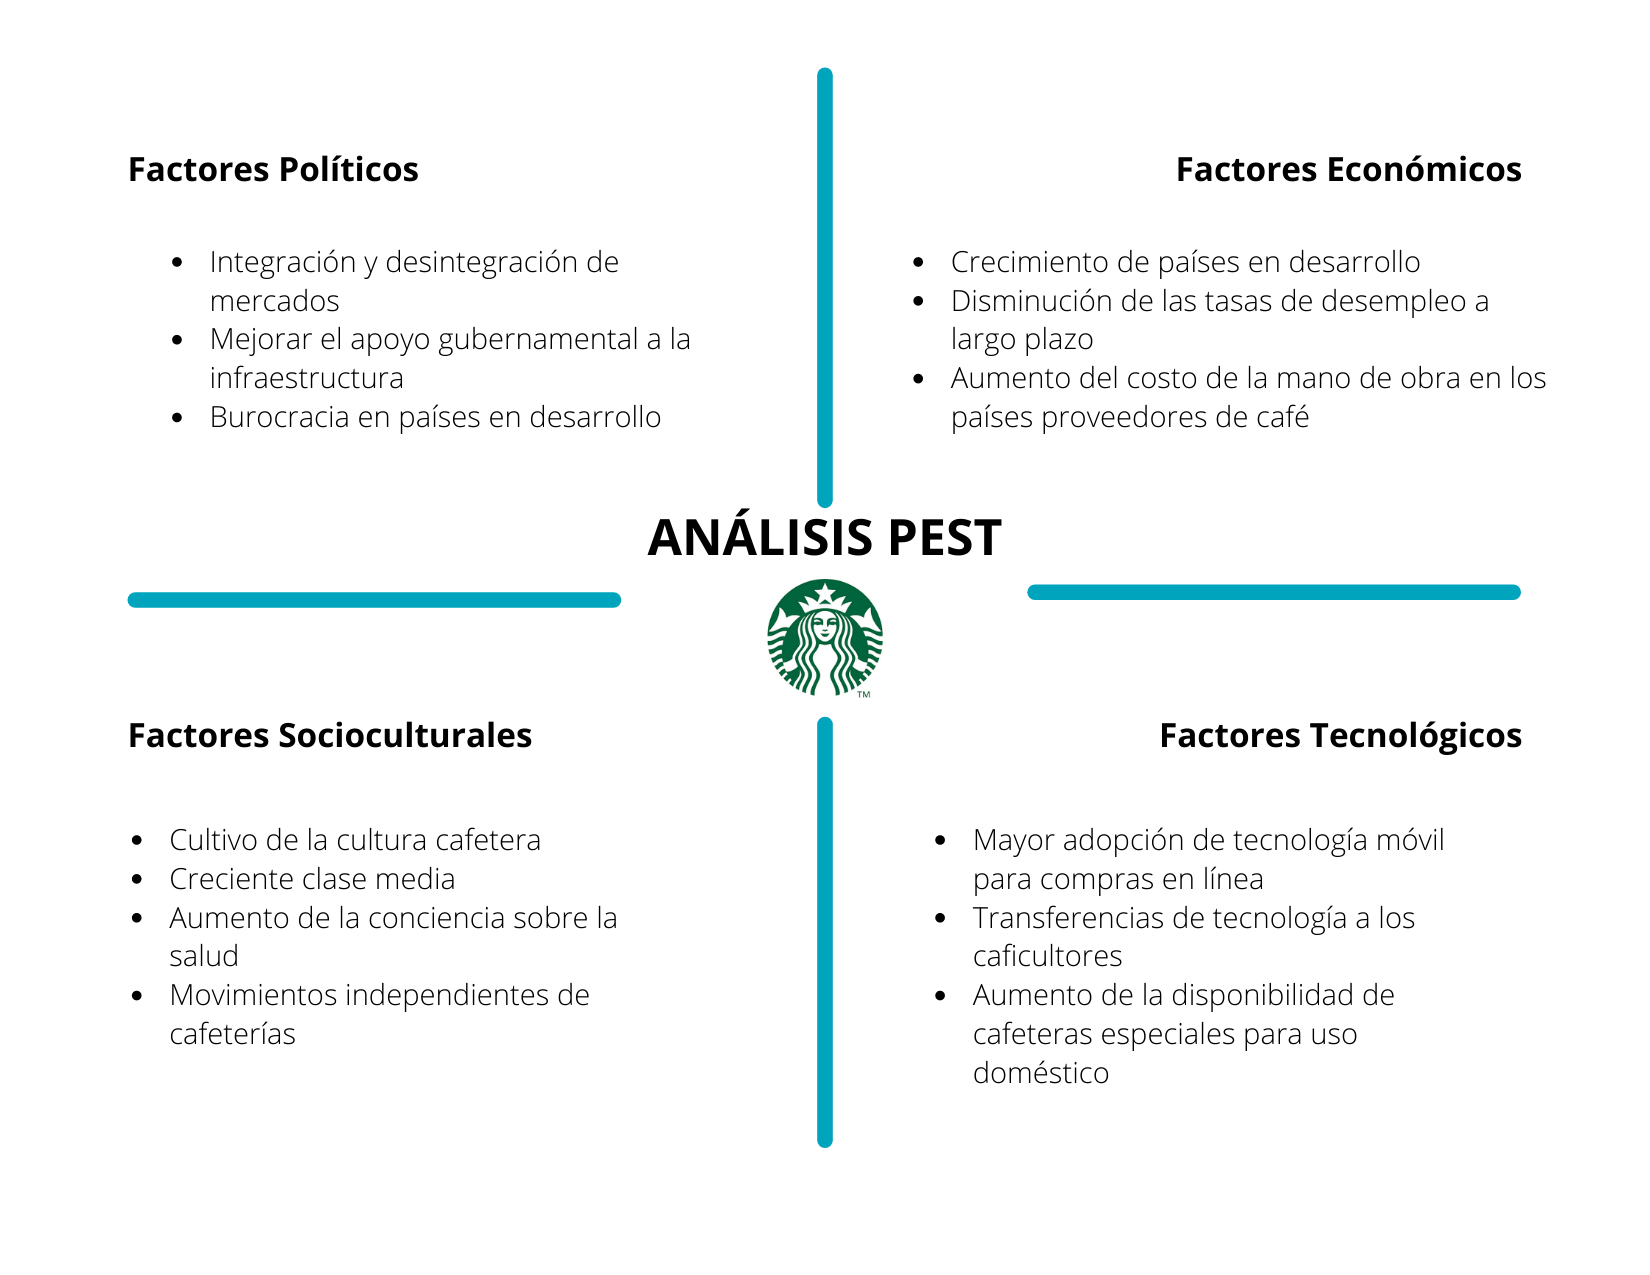 Ejemplo de análisis PEST de Starbucks